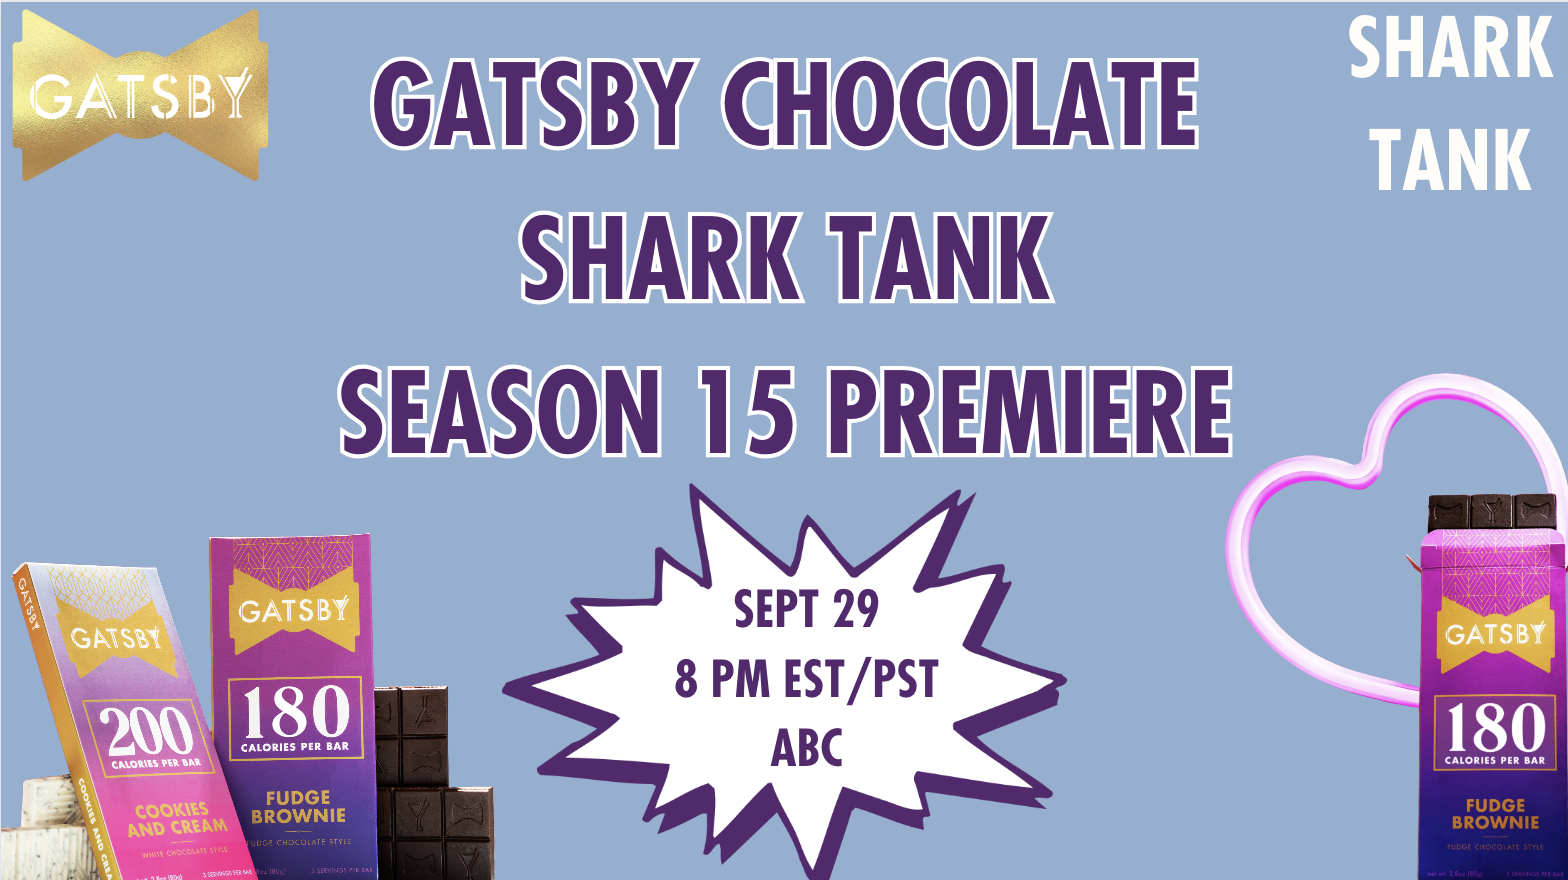 Gatsby Chocolate Shark Tank Season 15